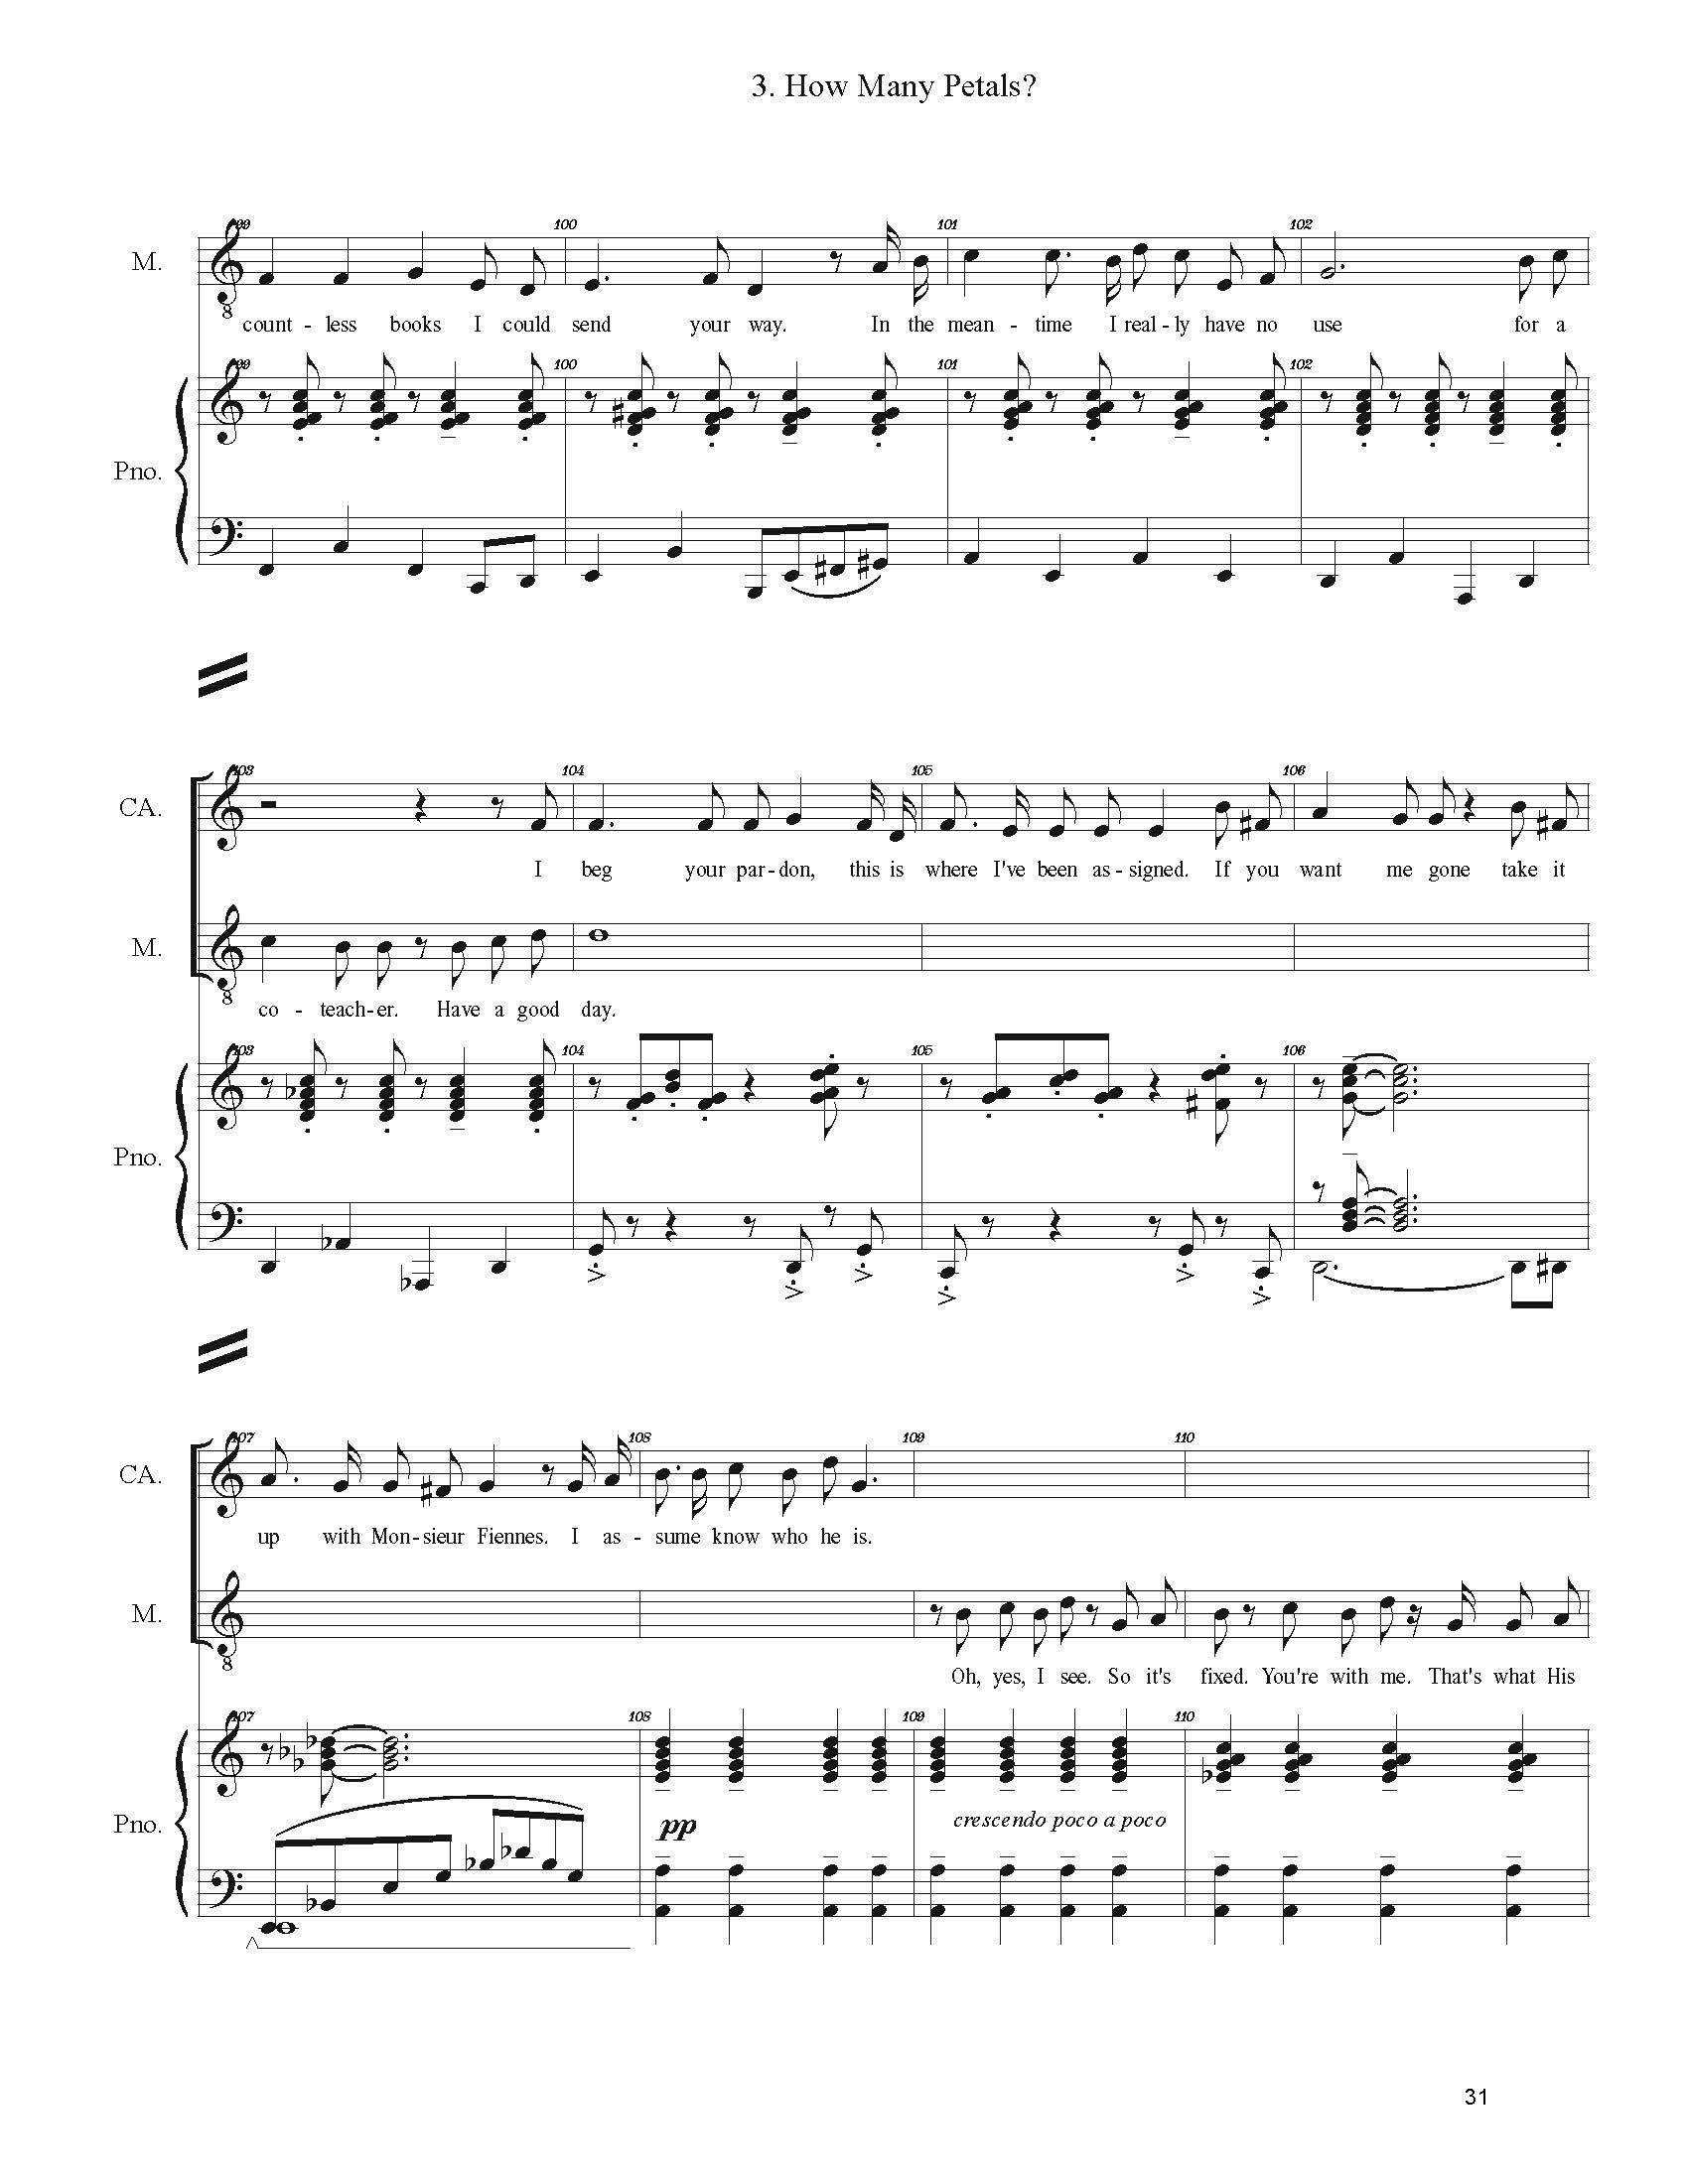 FULL PIANO VOCAL SCORE DRAFT 1 - Score_Page_031.jpg